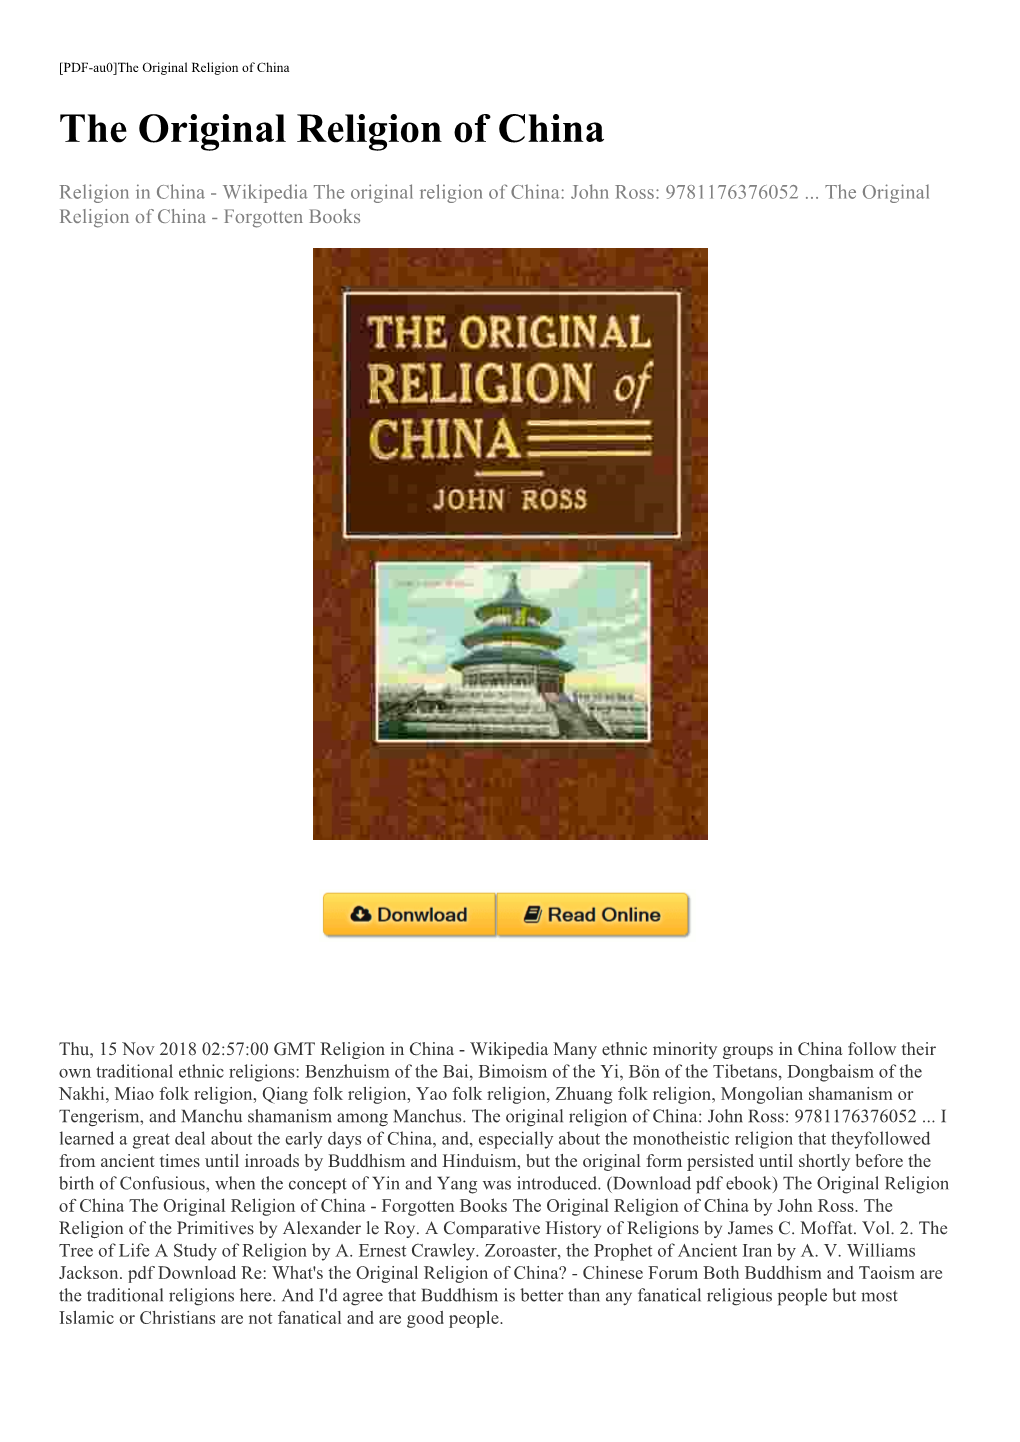 (Download Pdf Ebook) the Original Religion of China the Original Religion of China - Forgotten Books the Original Religion of China by John Ross